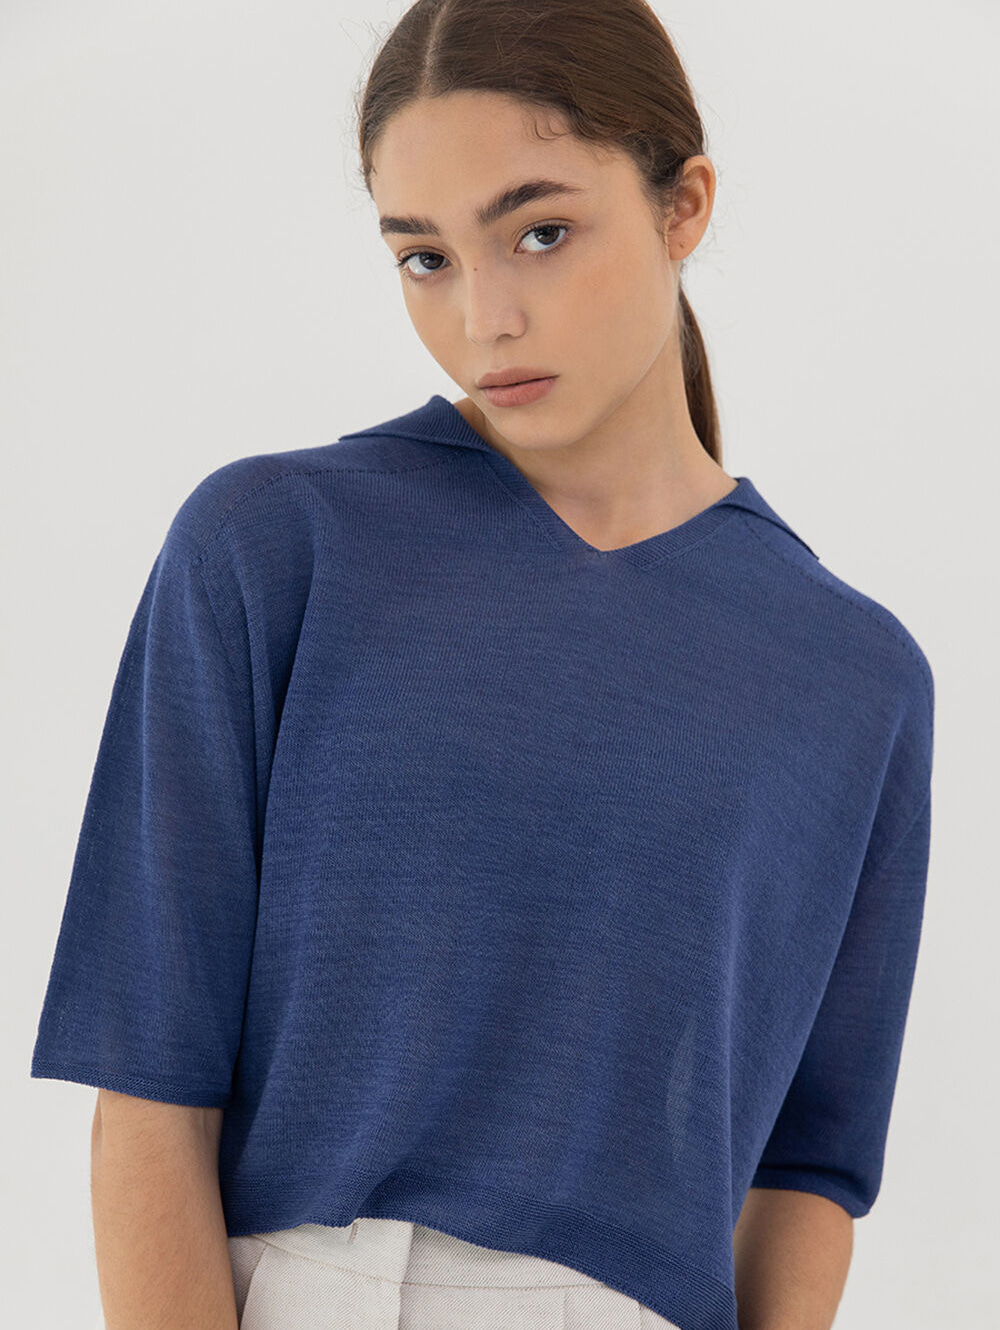 Wholegarment linen knit (blue)